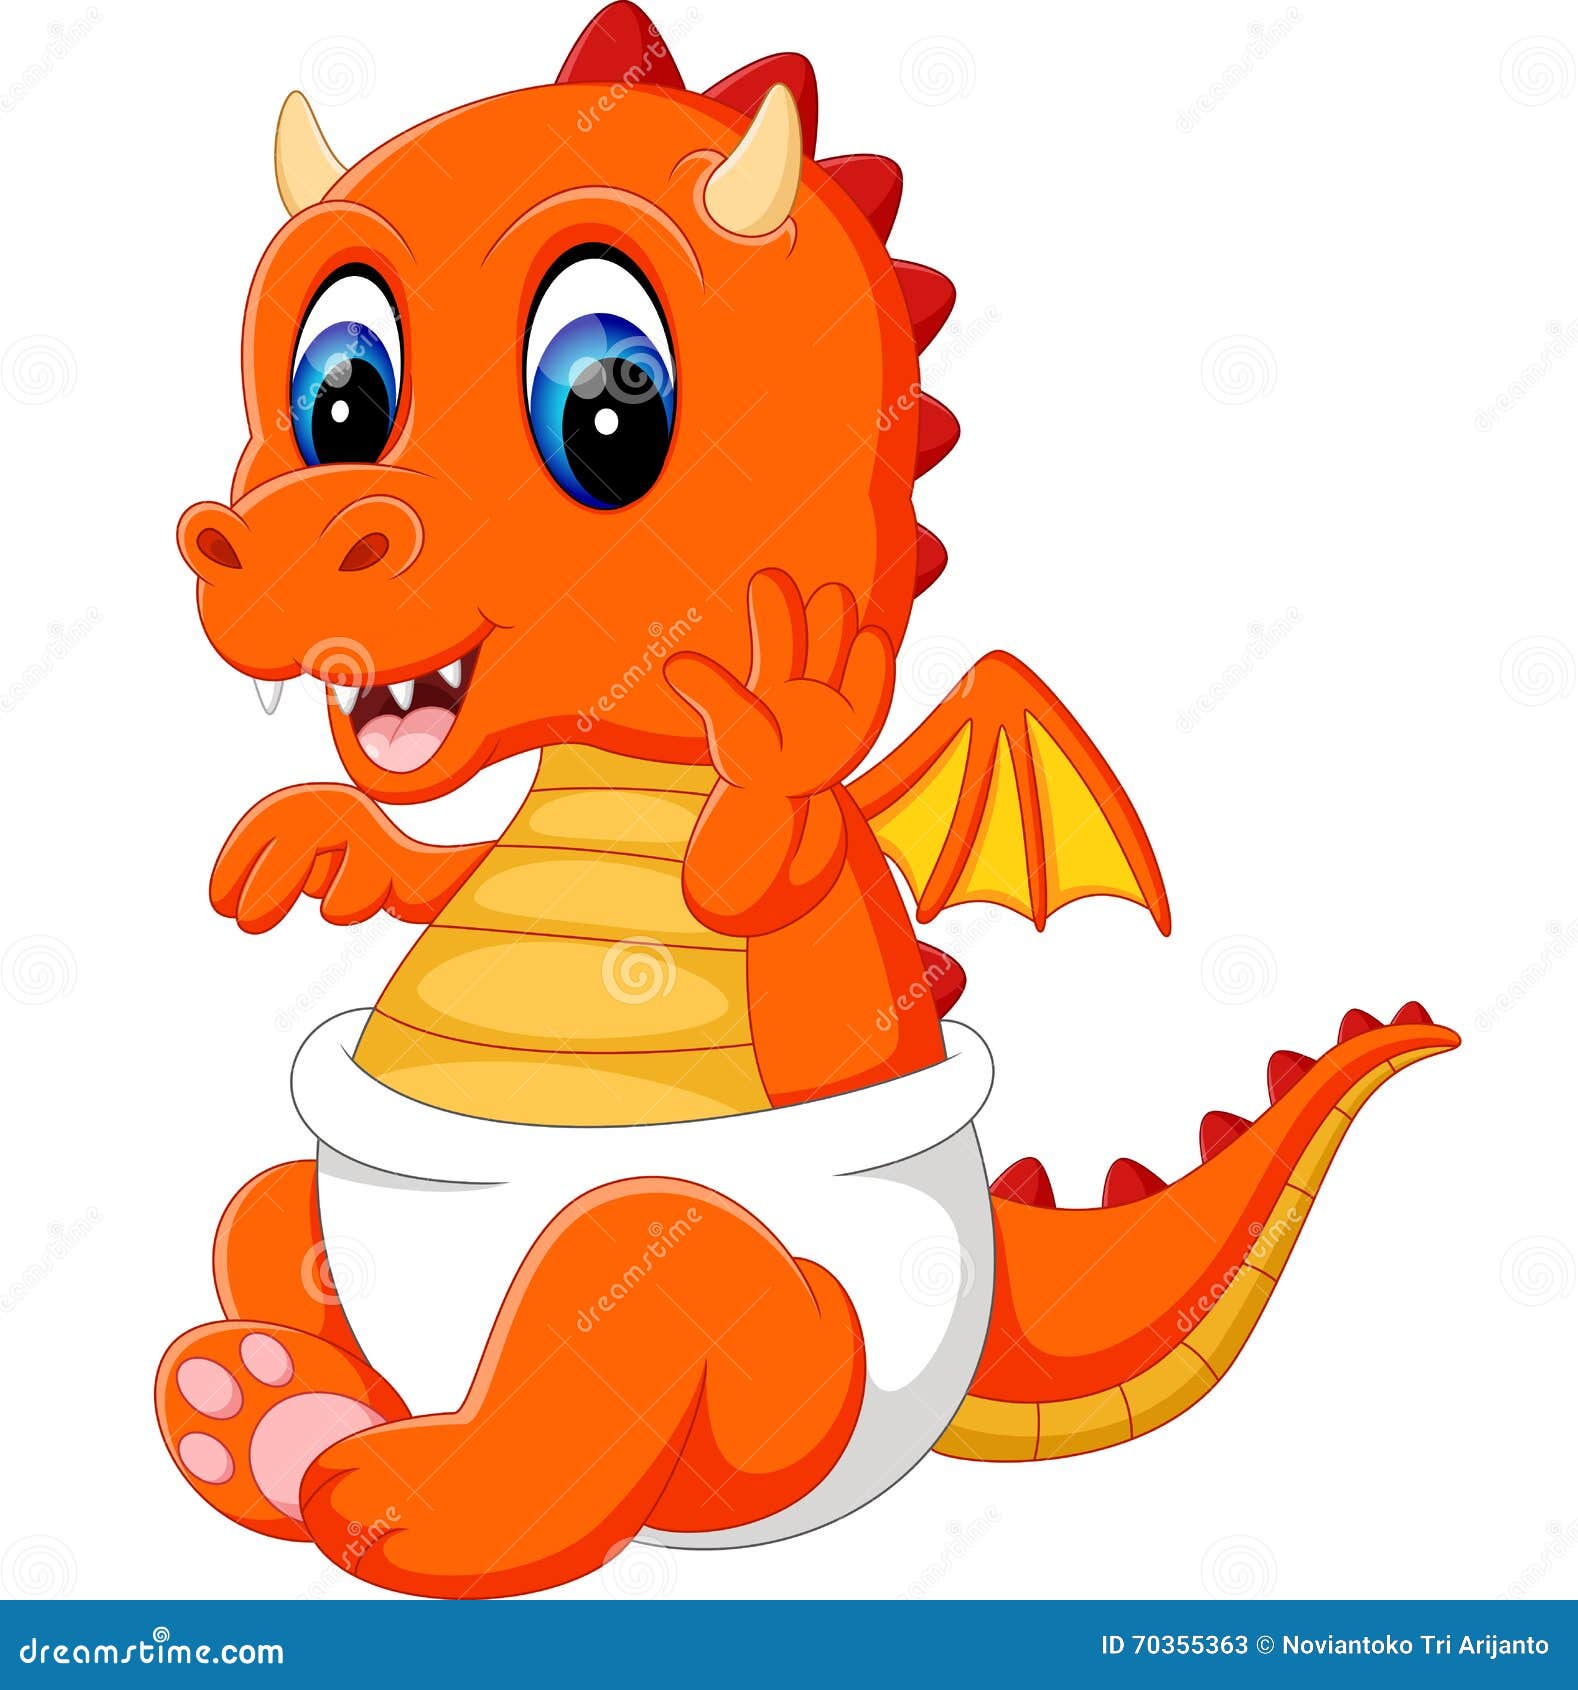 Cute baby dragon cartoon stock vector. Illustration of animal - 70355363